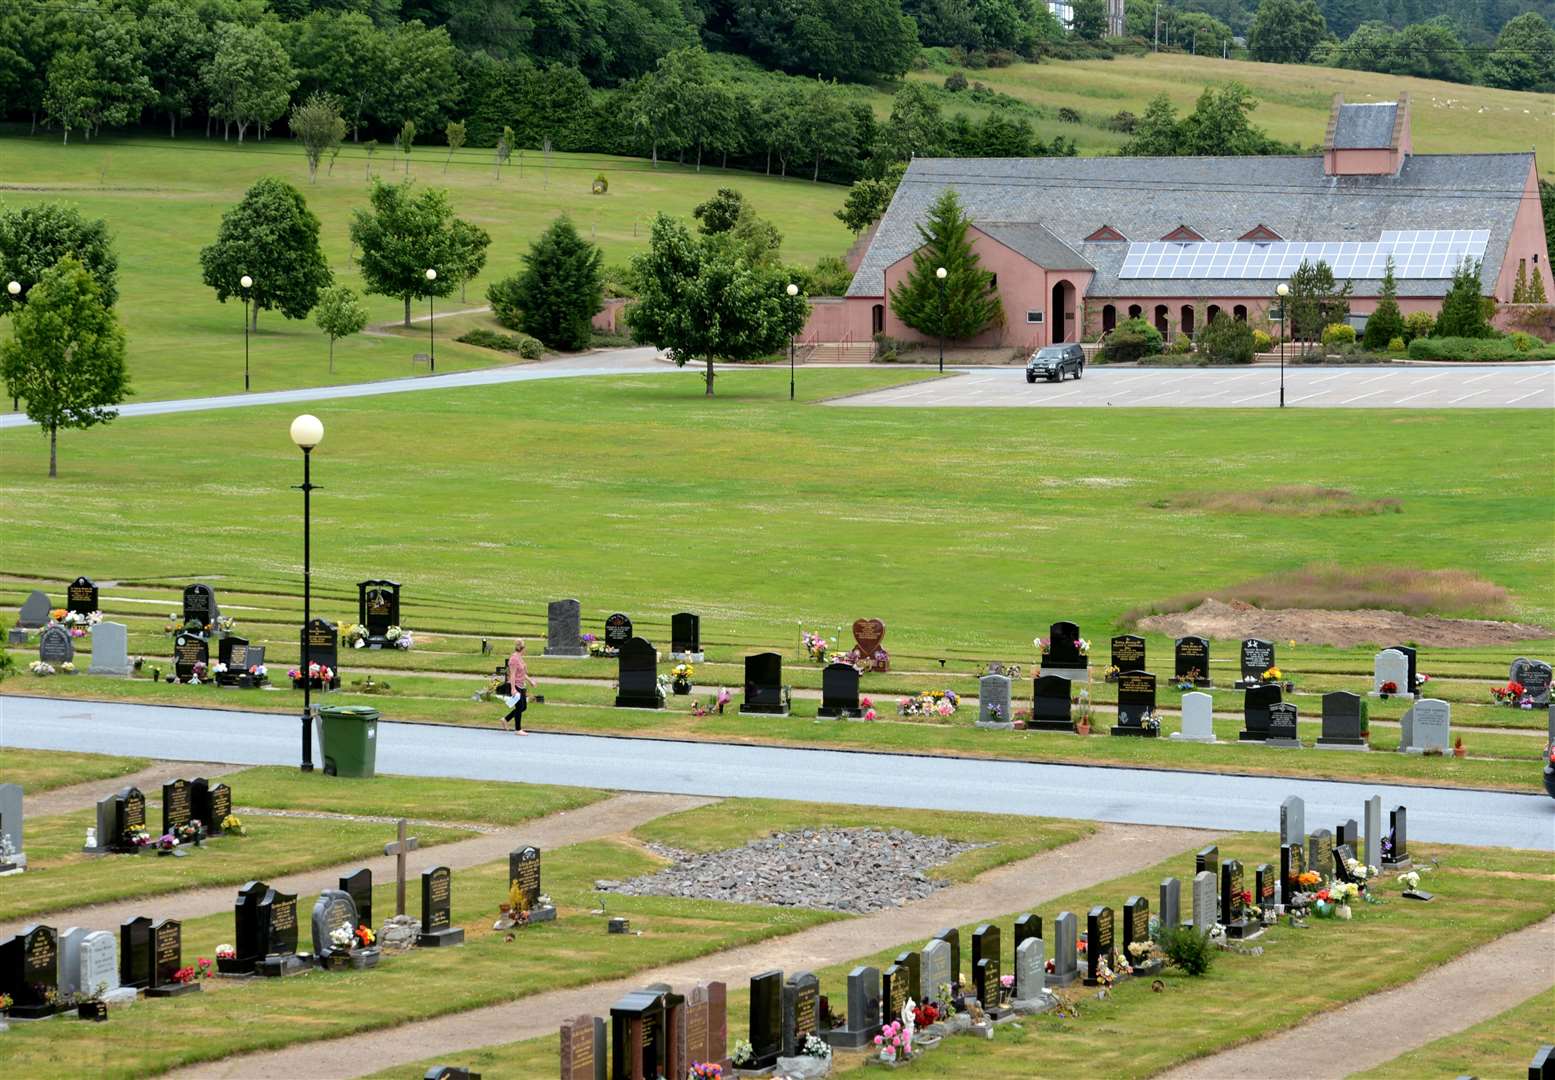 Kilvean Cemetery and crematorium in Inverness.